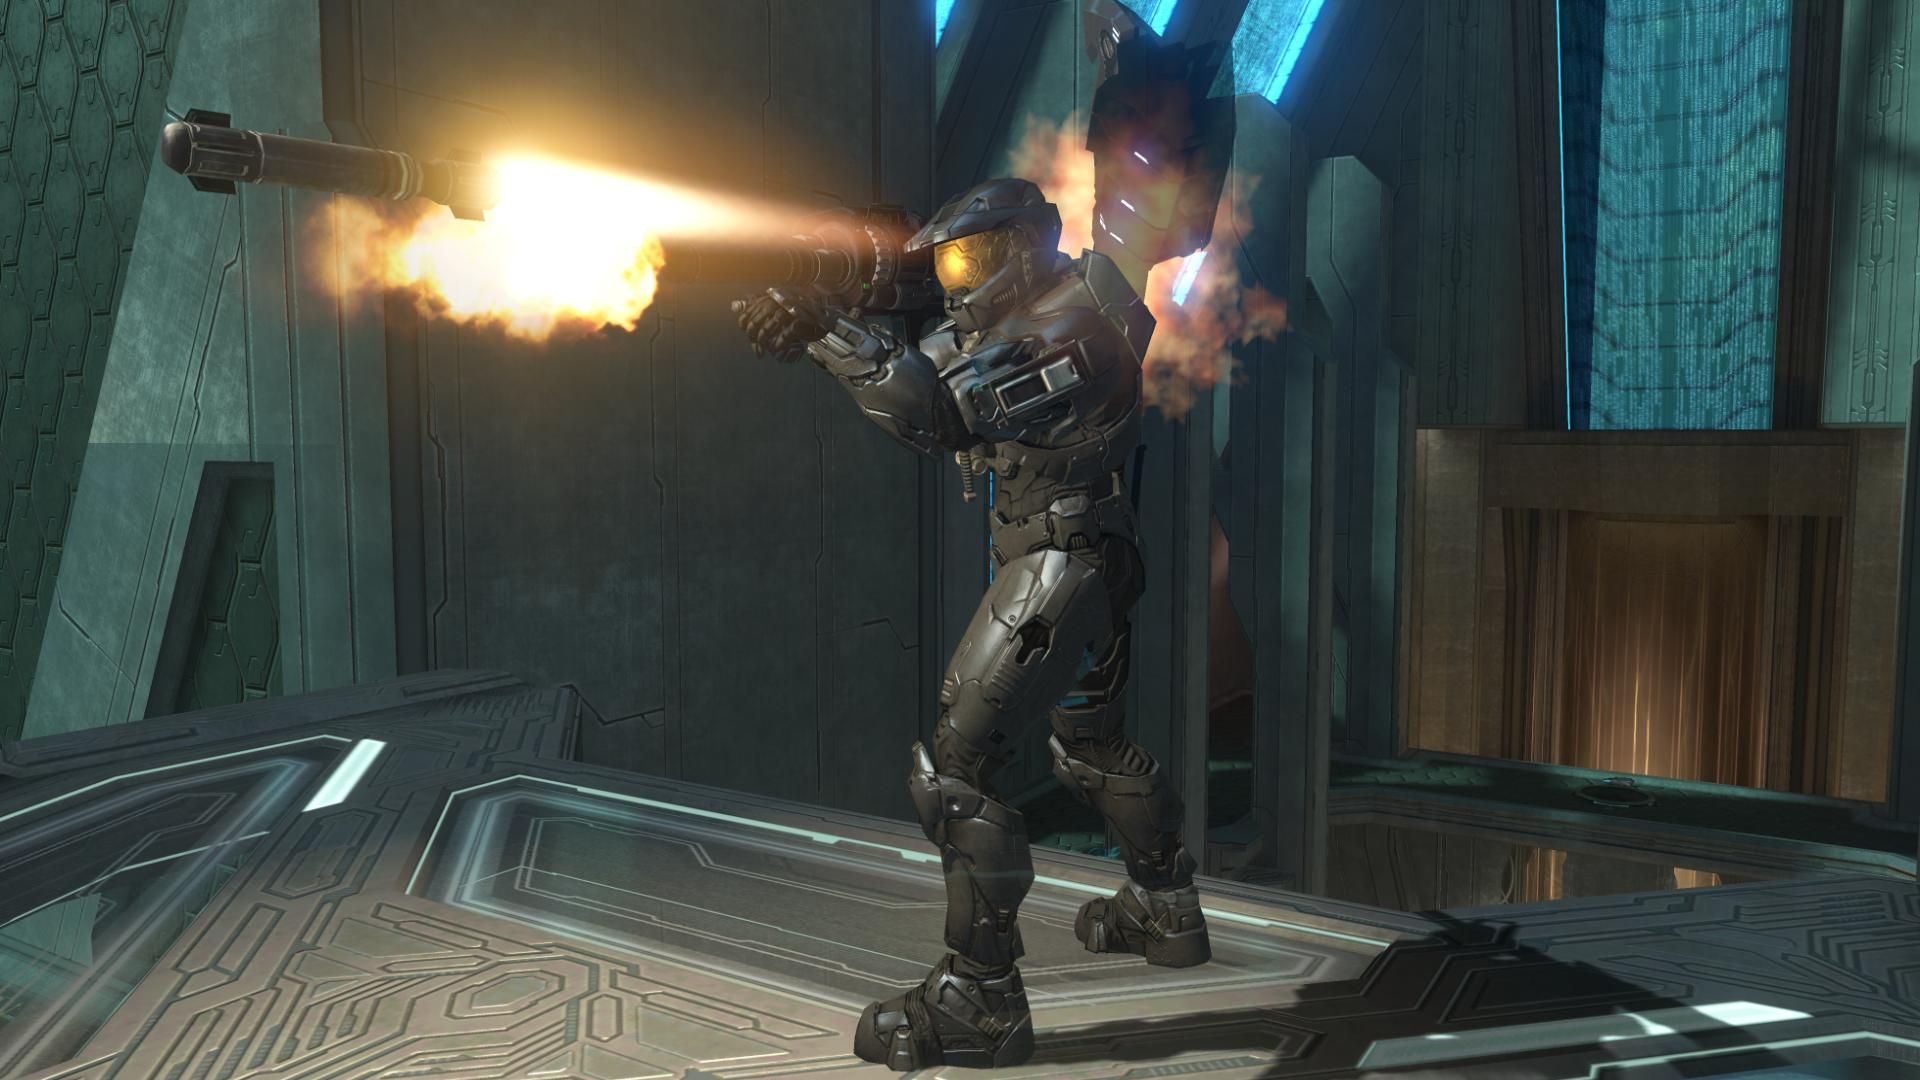 Shooting Rocket Launcher in Halo 3